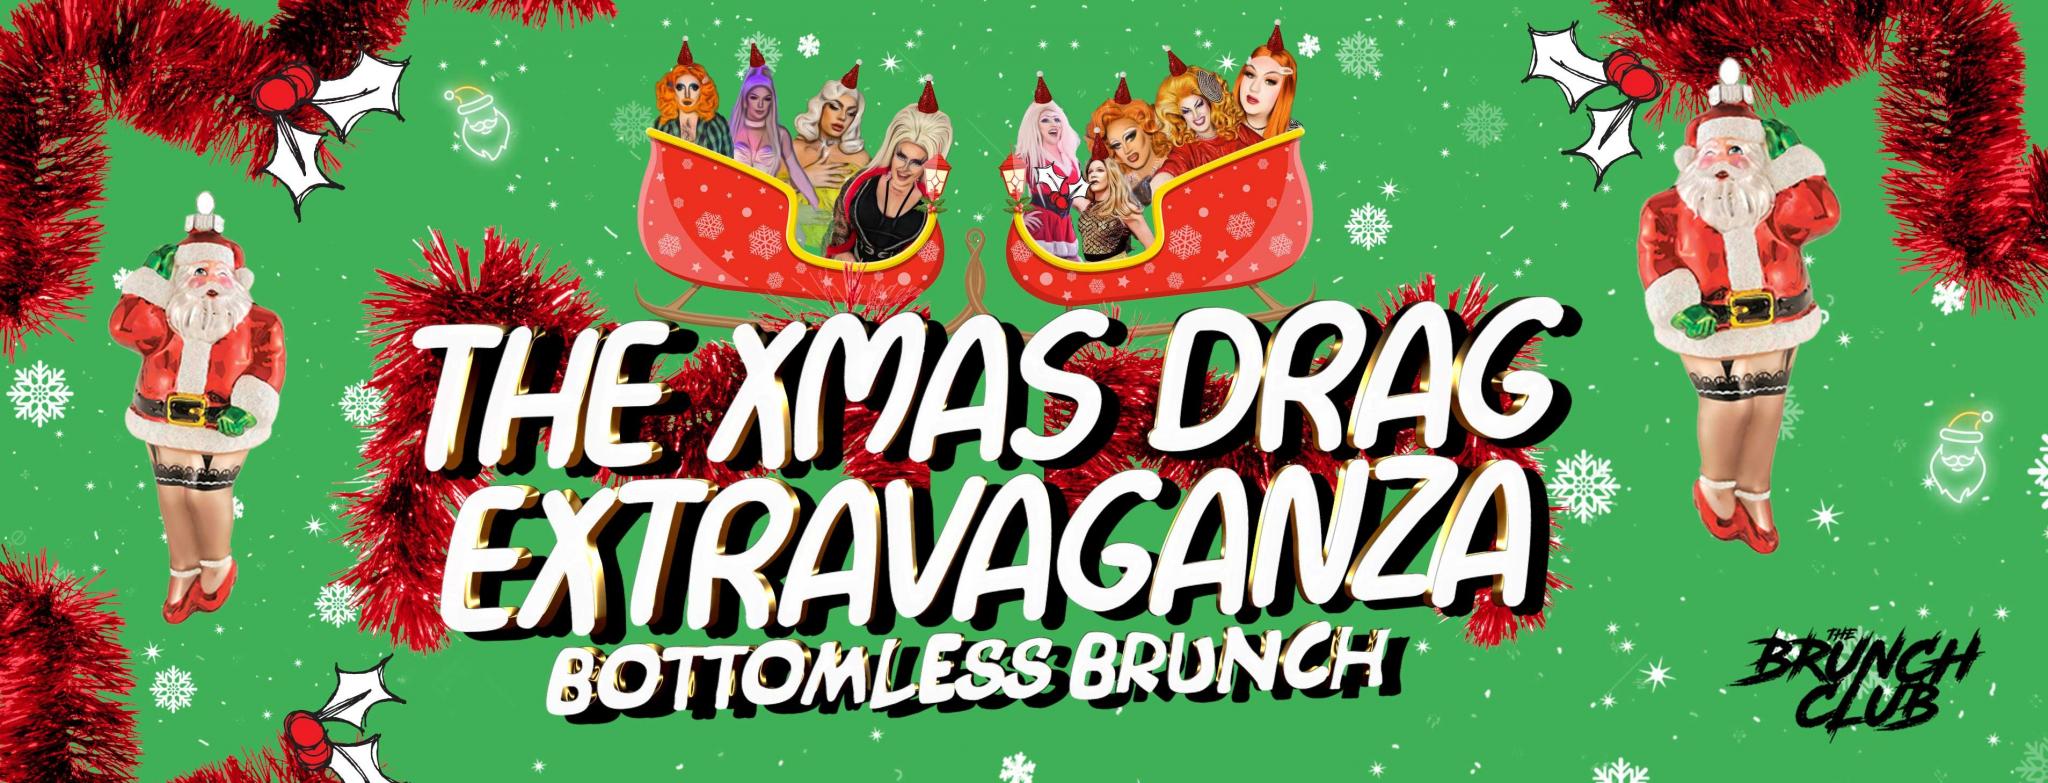 The Xmas Drag Extravaganza Bottomless Brunch - Newcastle